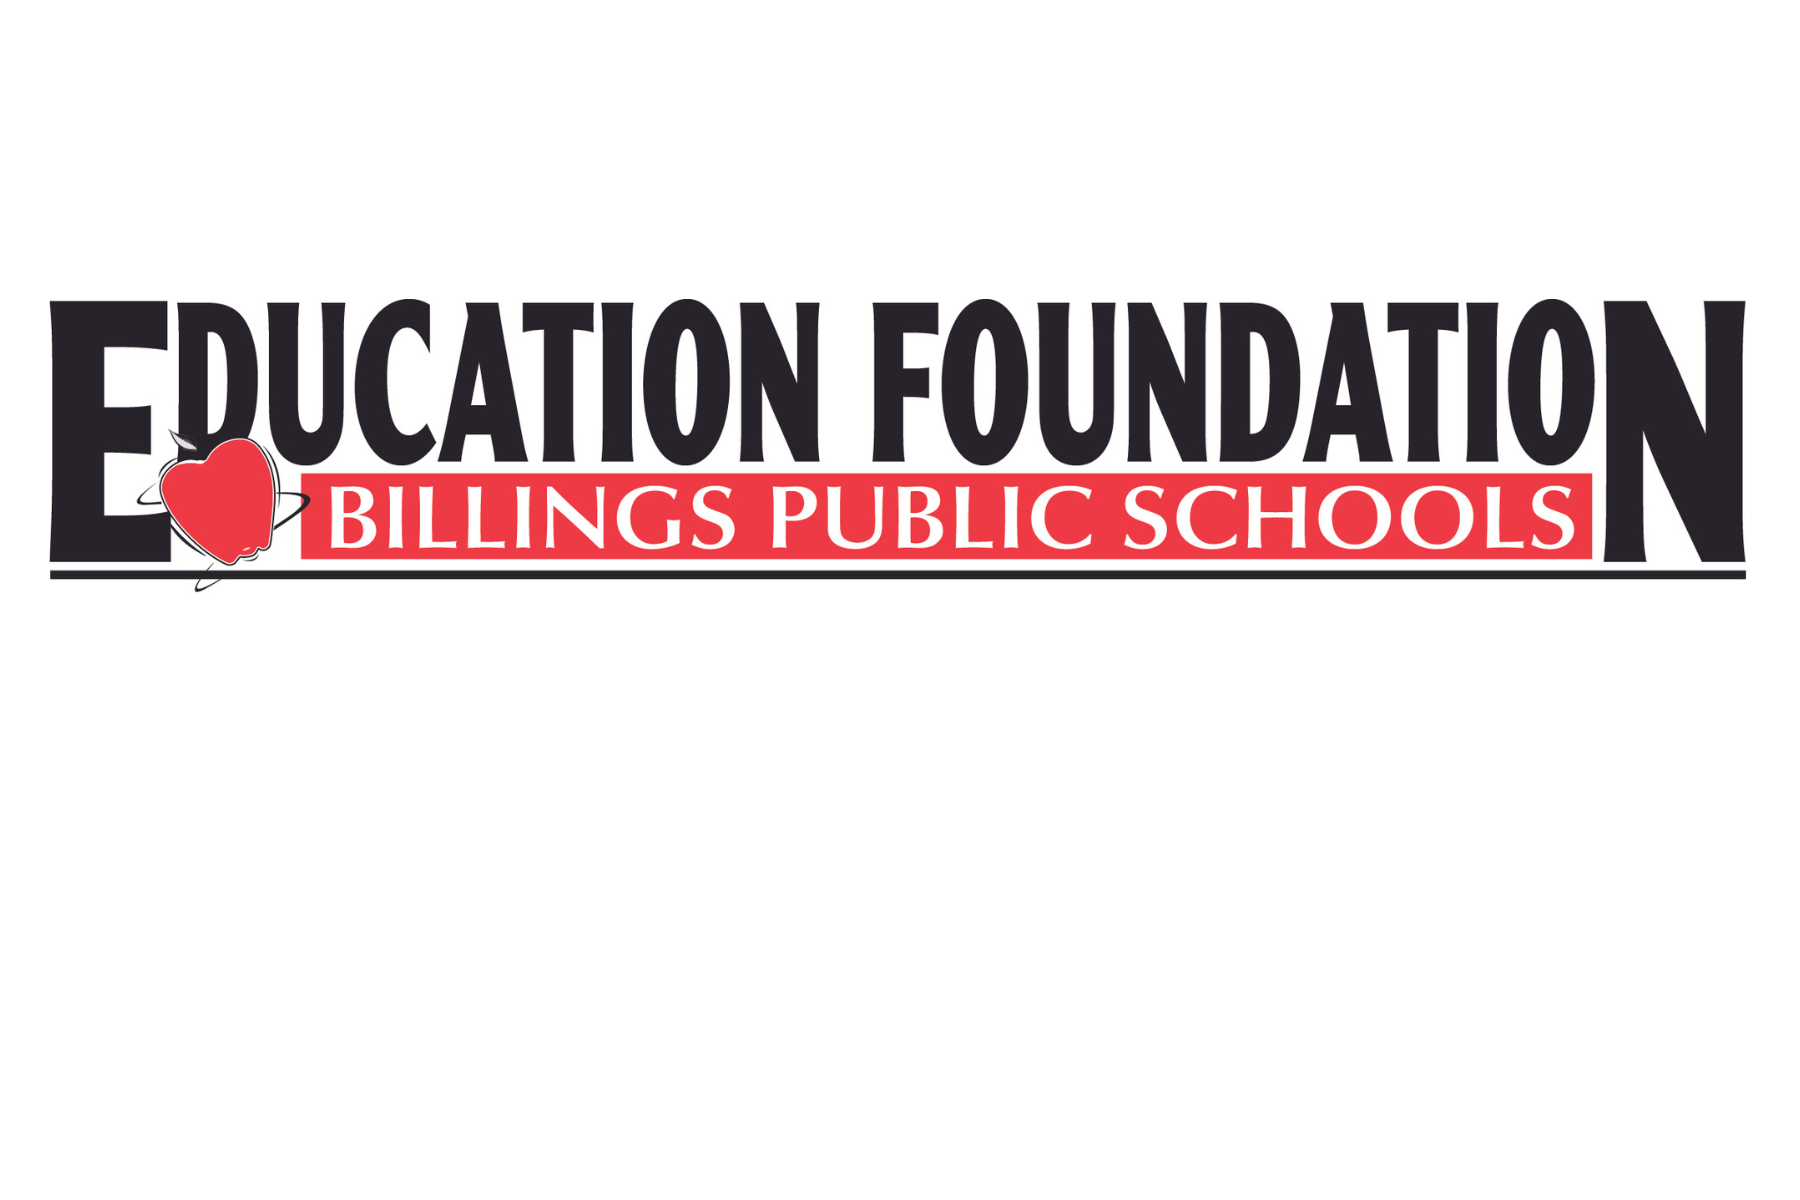 Education Foundation for Billings Public Schools